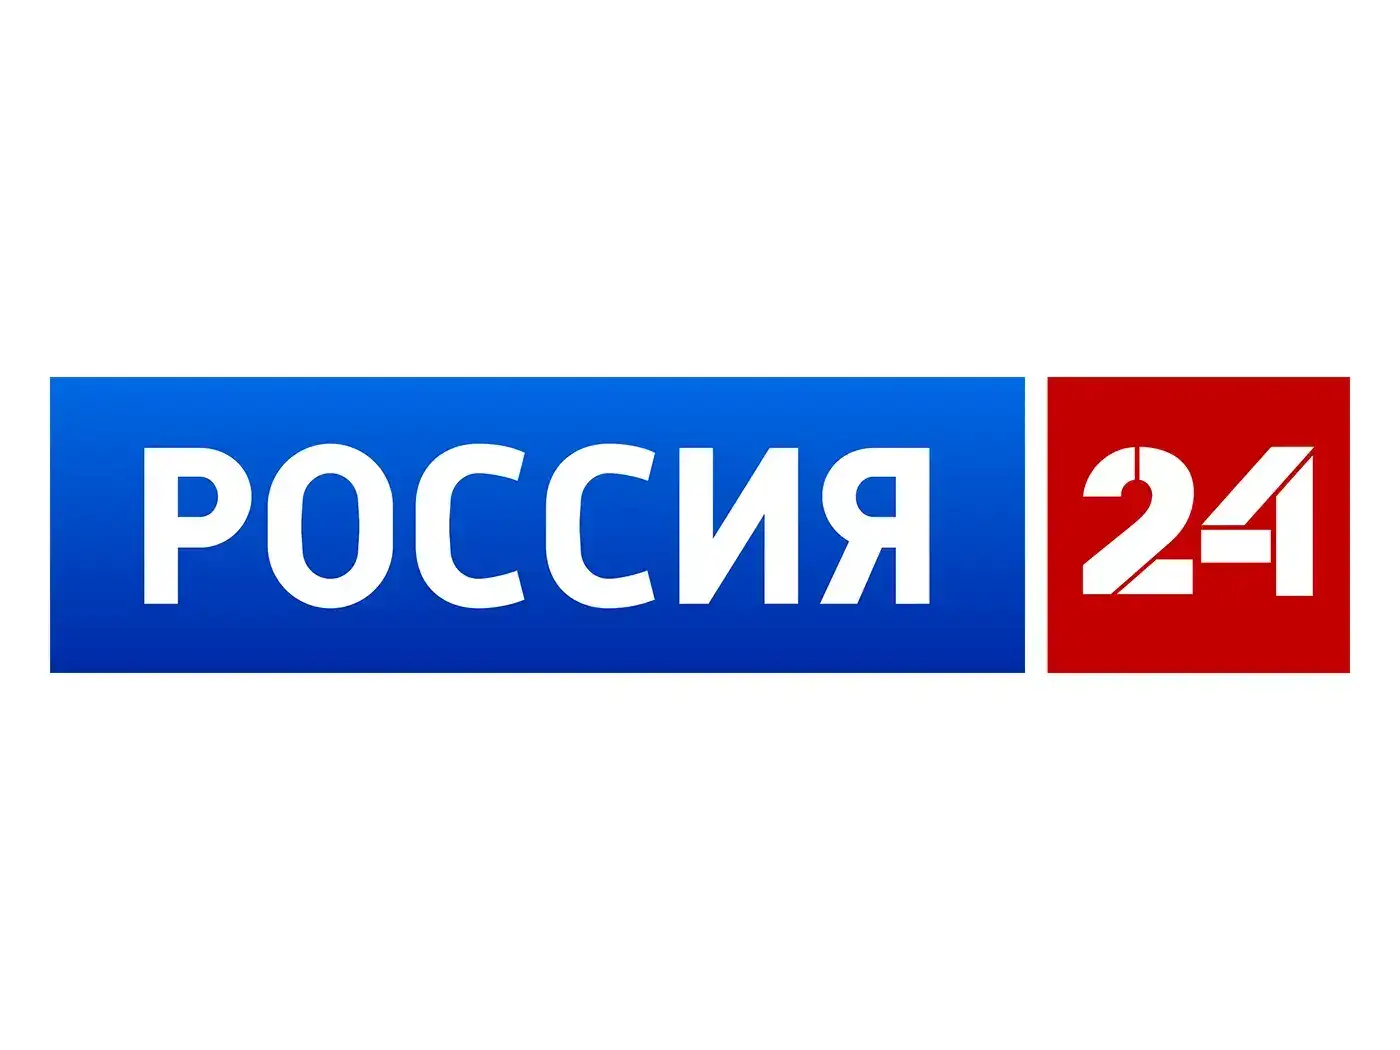 Tv канал россия